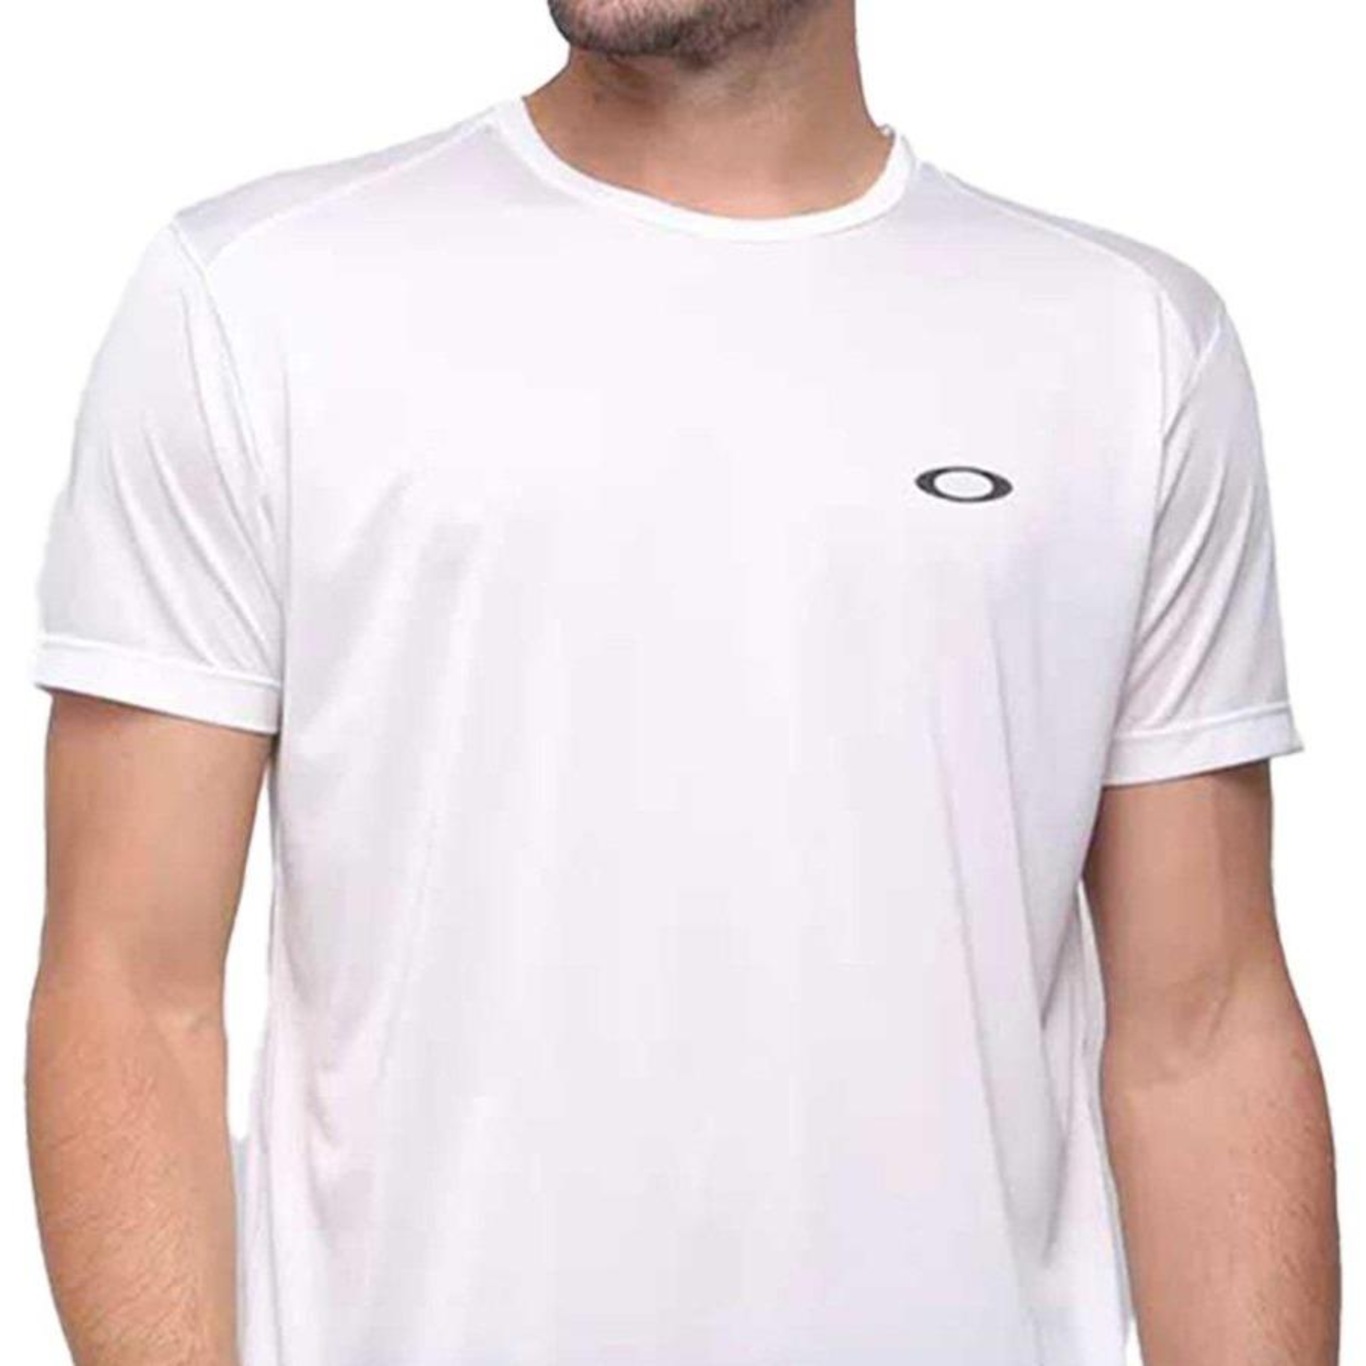 Camiseta Oakley Daily Sport Feminina - Camisa e Camiseta Esportiva